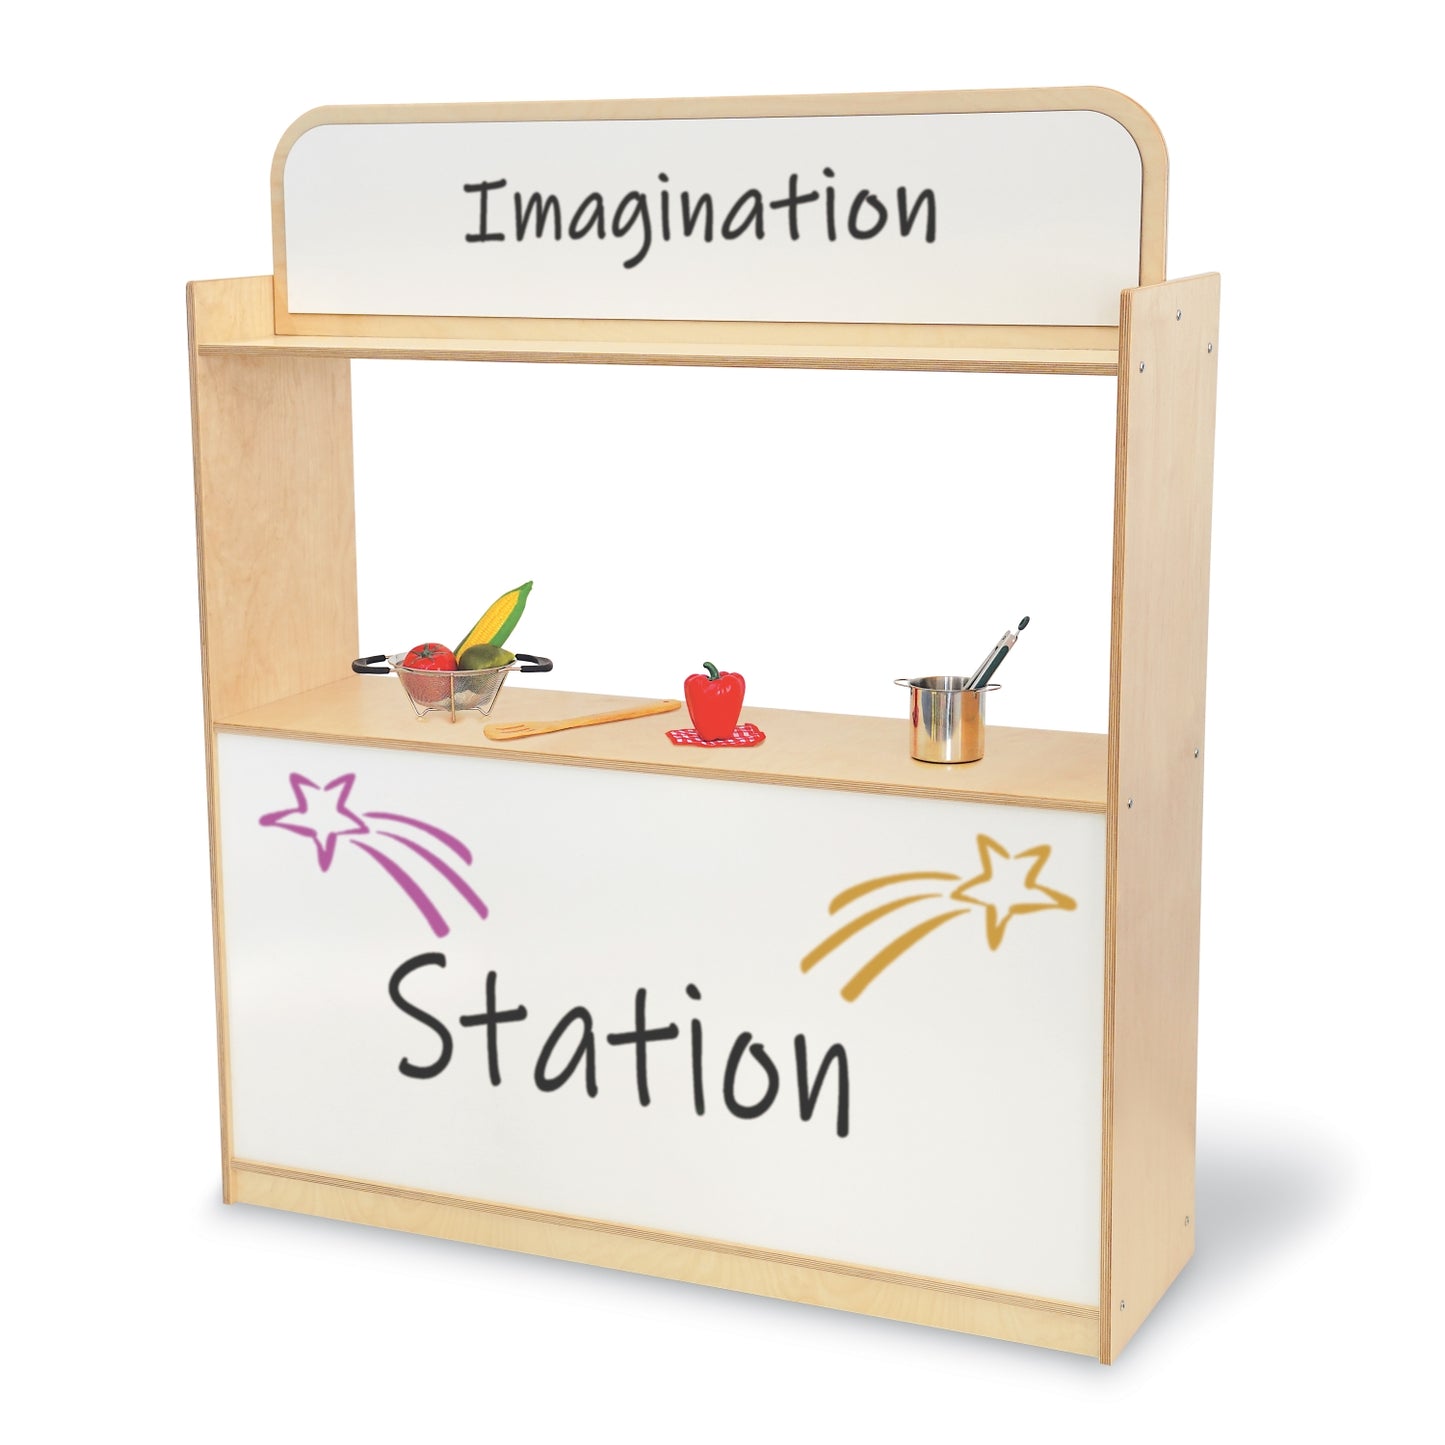 Imagination Station